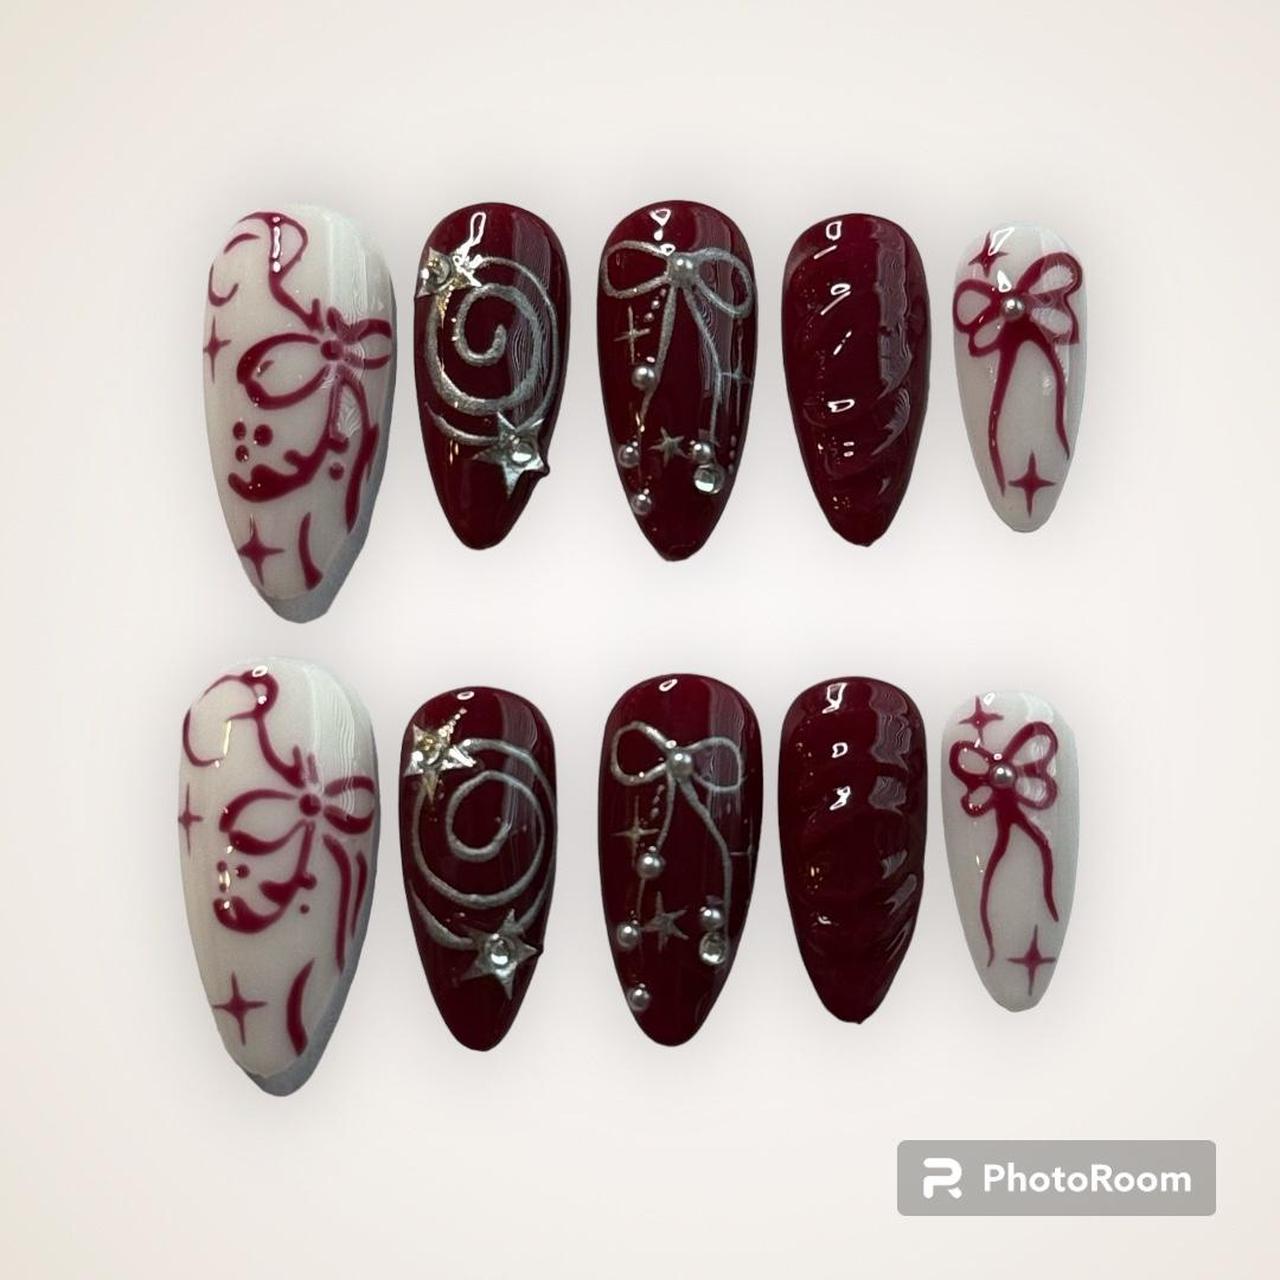 Huda beauty lady luxe nails, never used!nieuwprijs - Depop